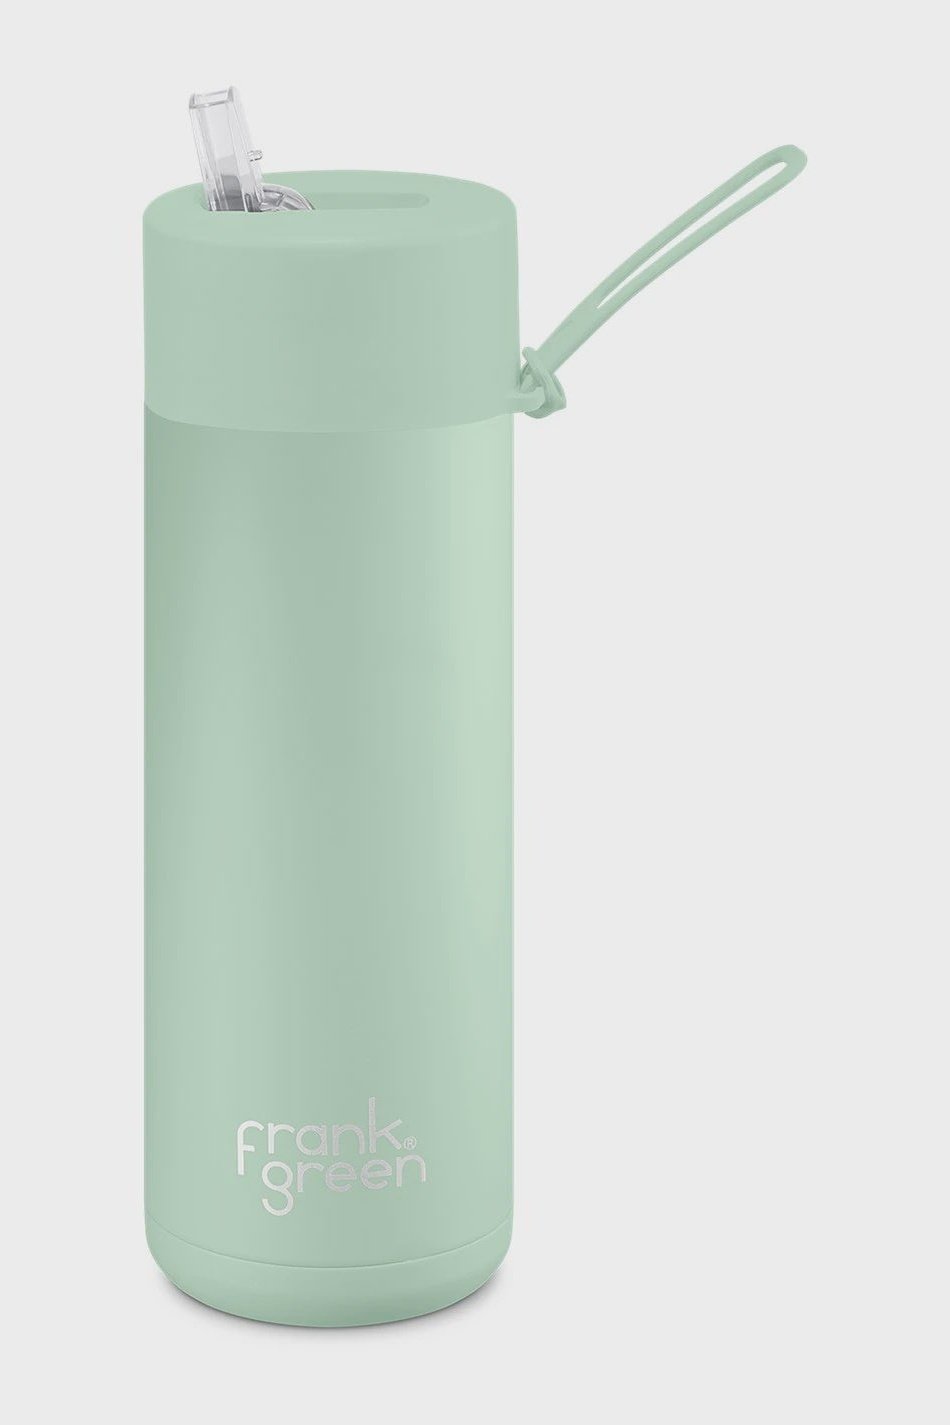 Frank Green Limited Edition Ceramic Reusable Bottle - 20oz / 595ml Pistachio Green